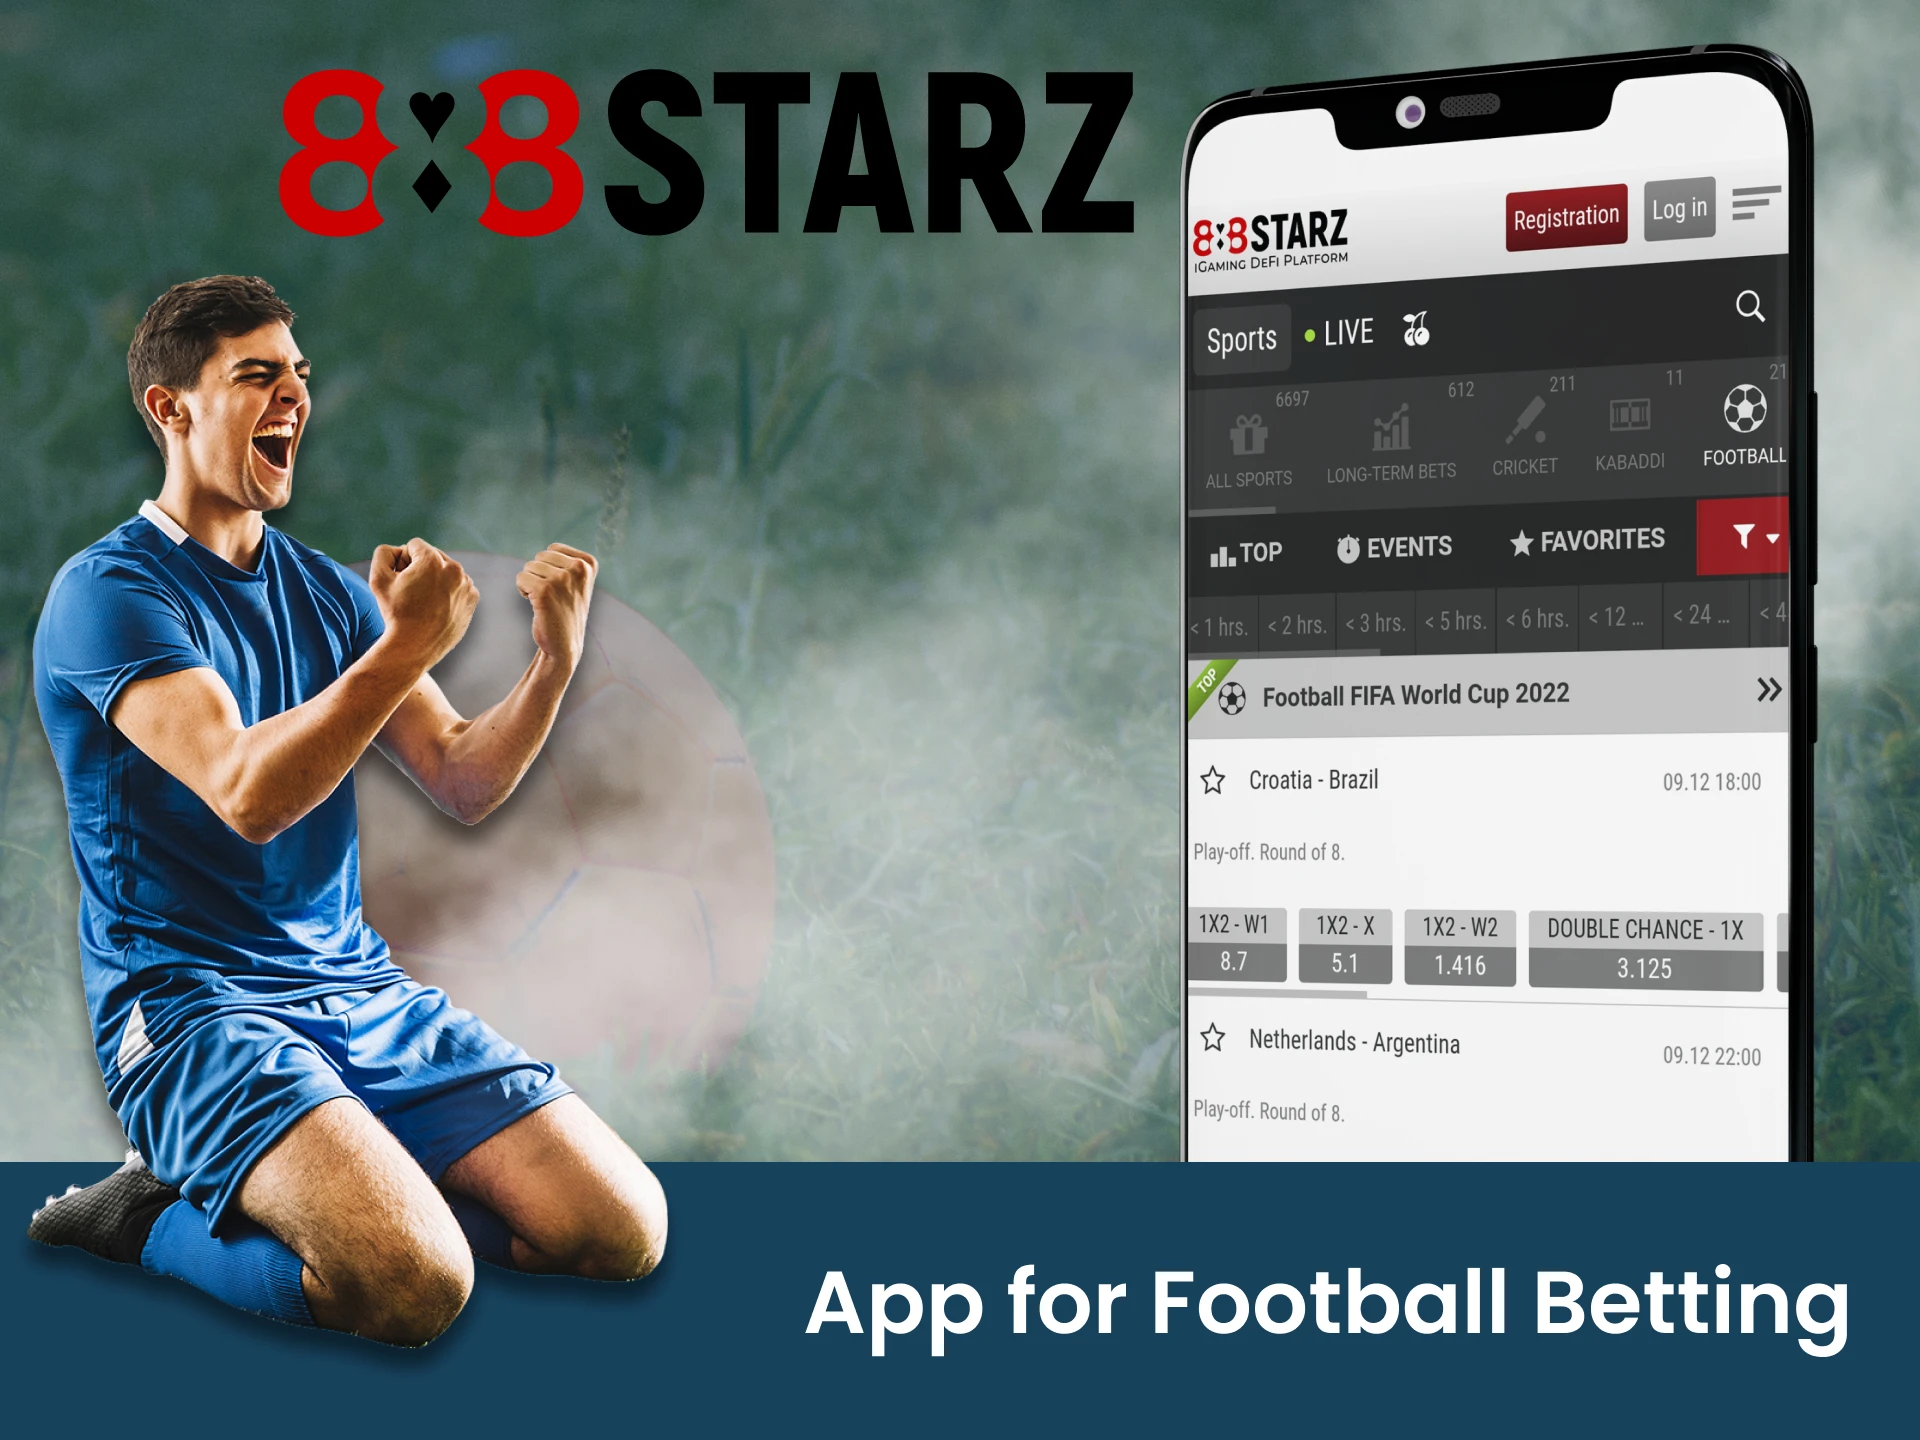 888starz designed a mobile app for betting on football.